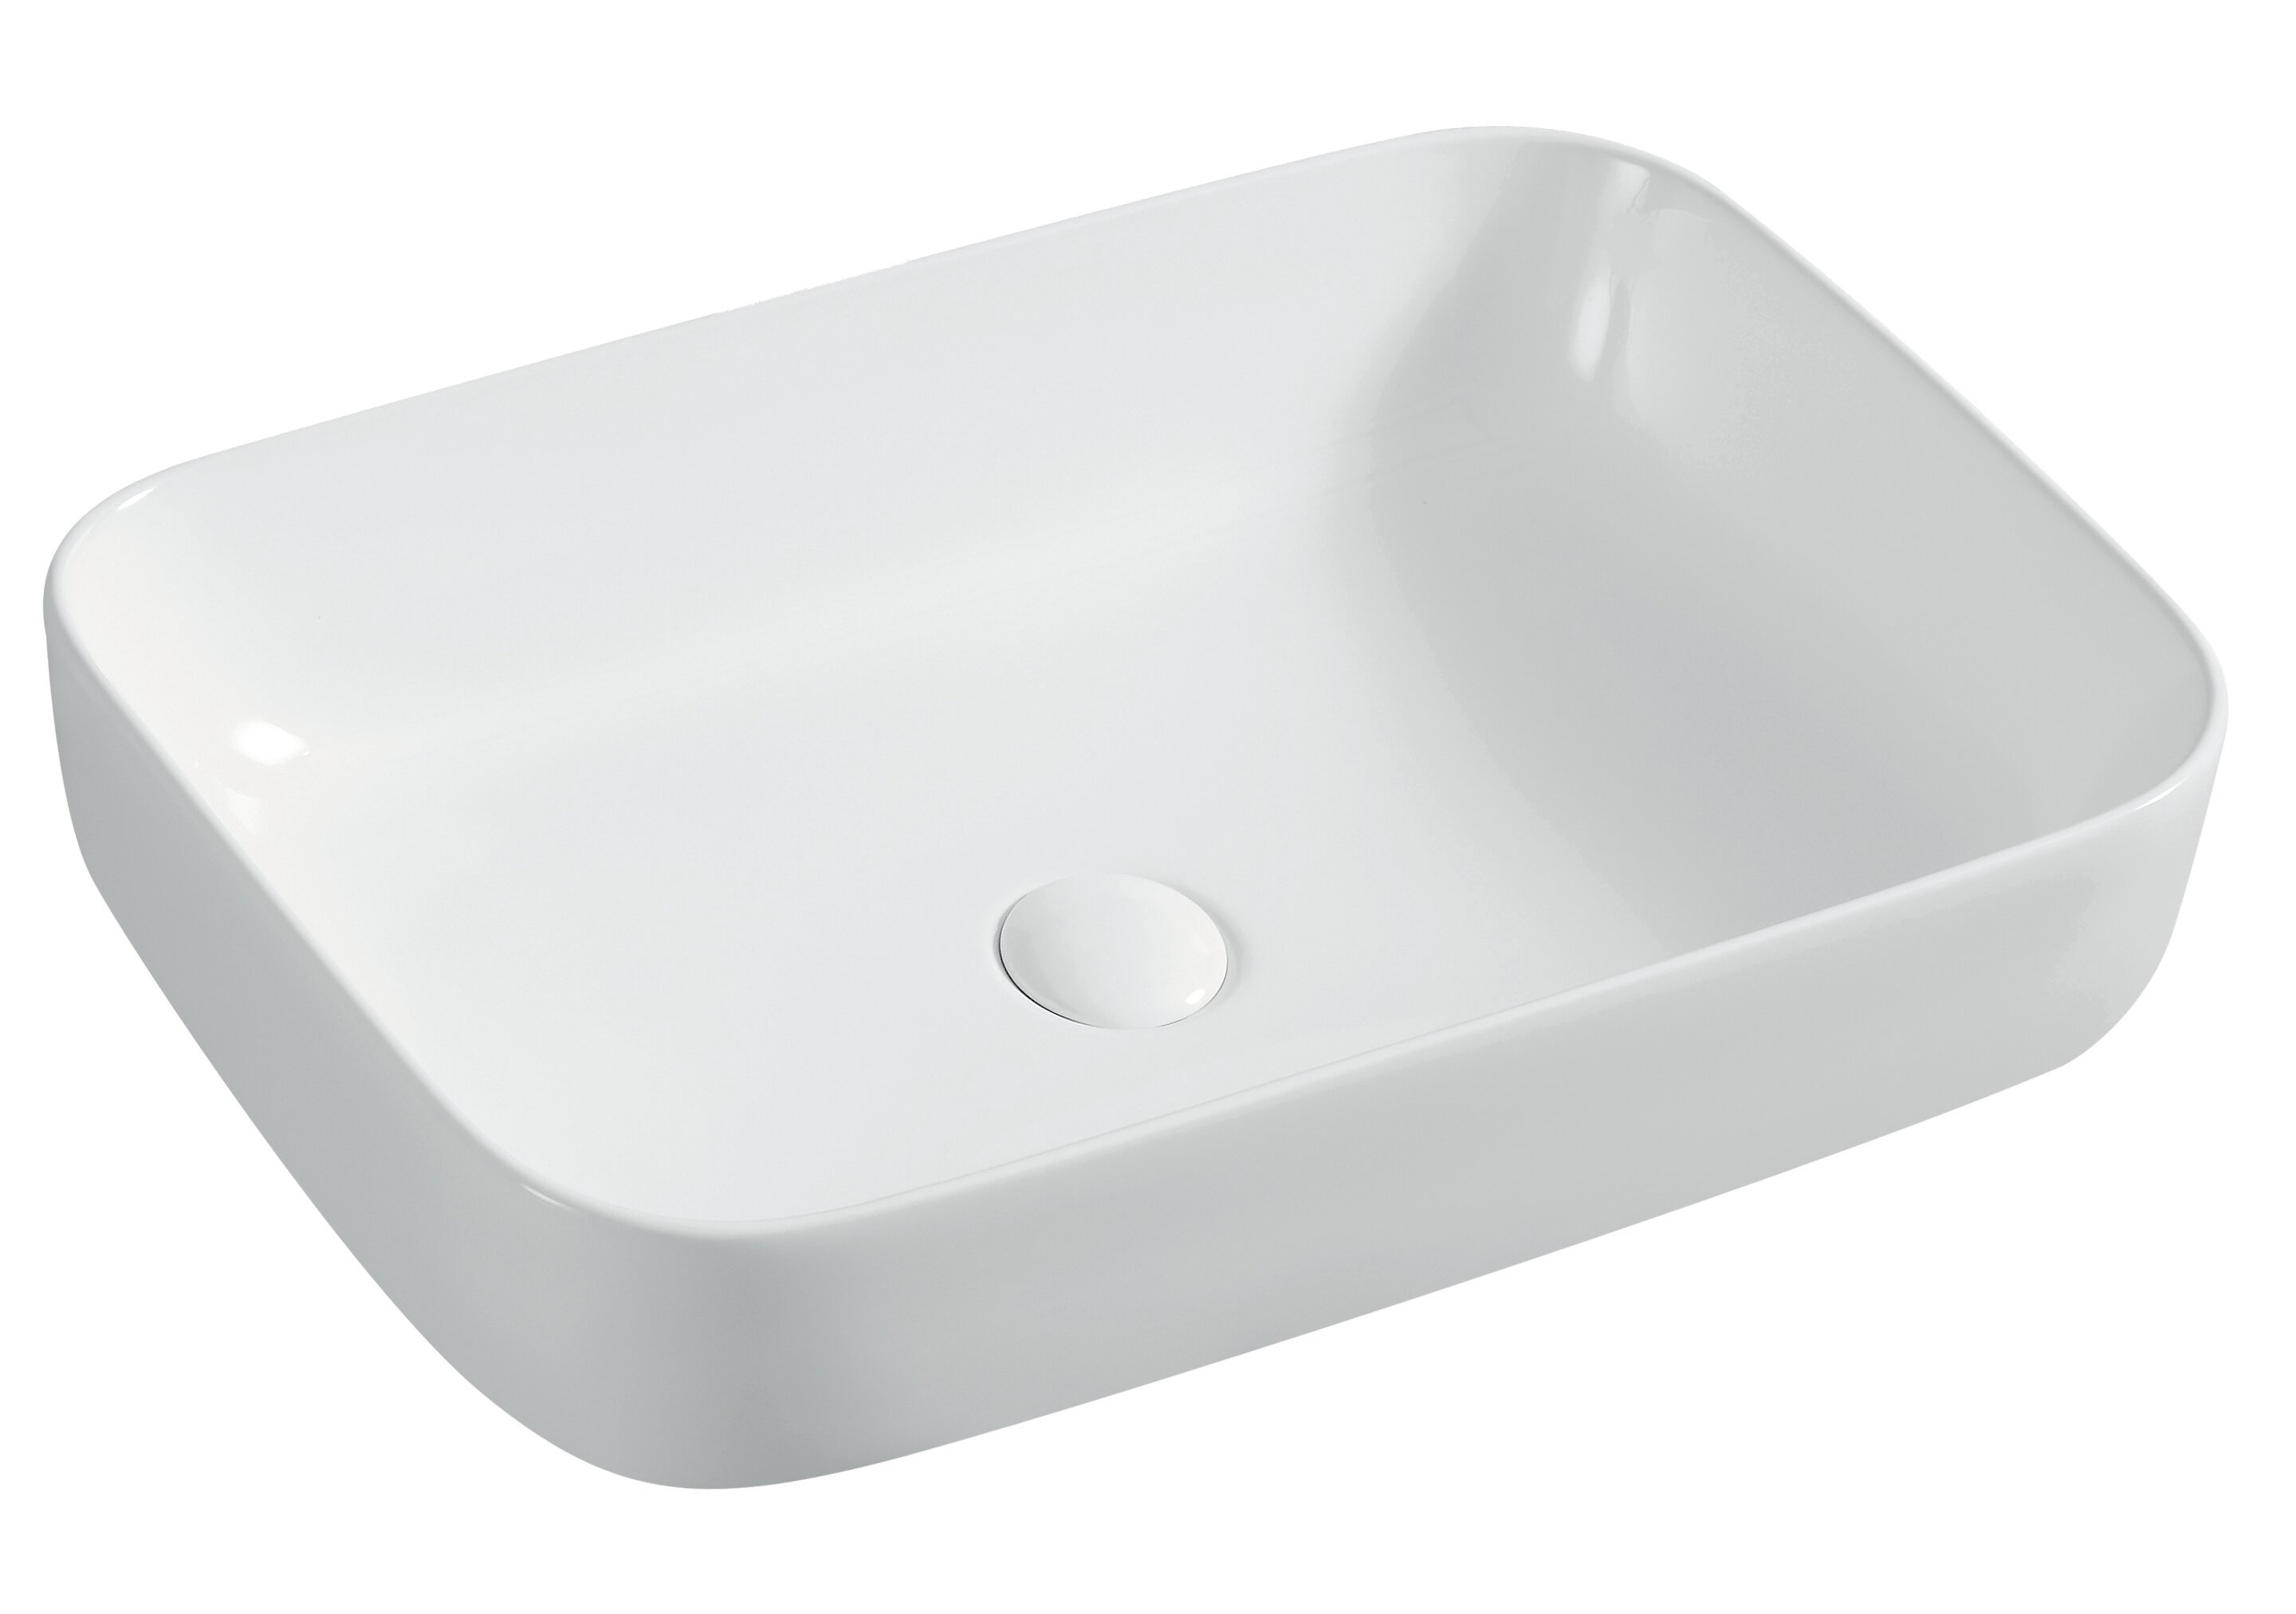 Empire Industries Torino Vitreous China Rectangular Vessel Bathroom Sink Wayfair